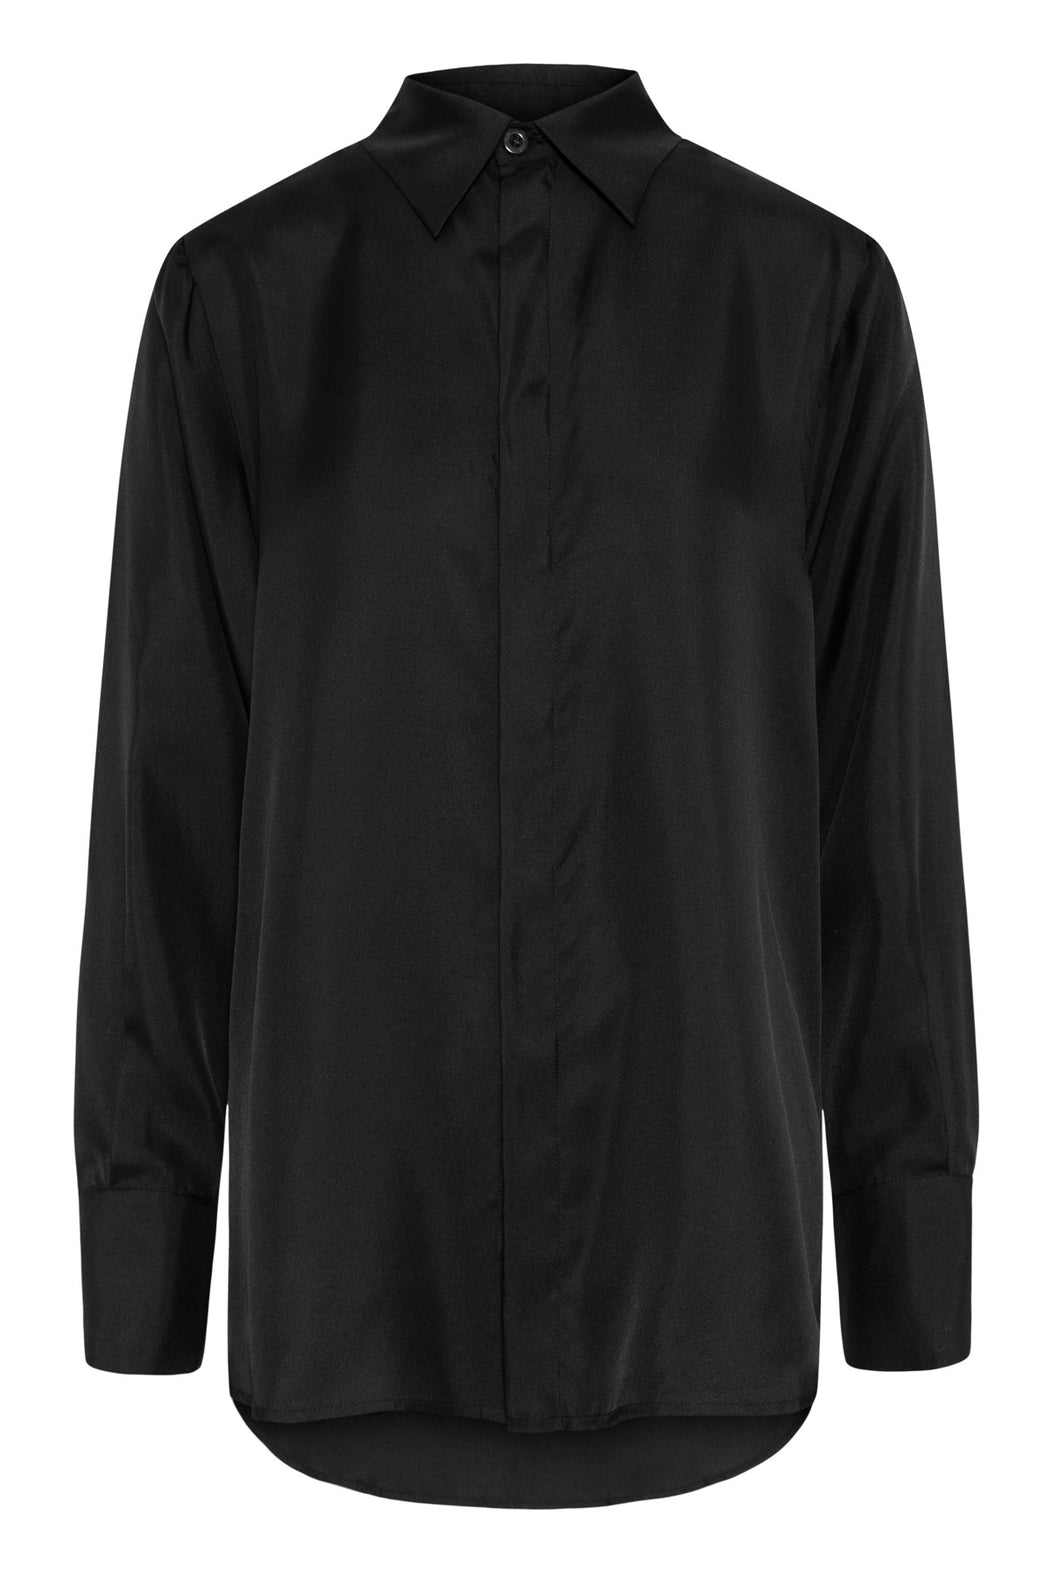 Envelope1976 Braga shirt - SIlk Shirt Black